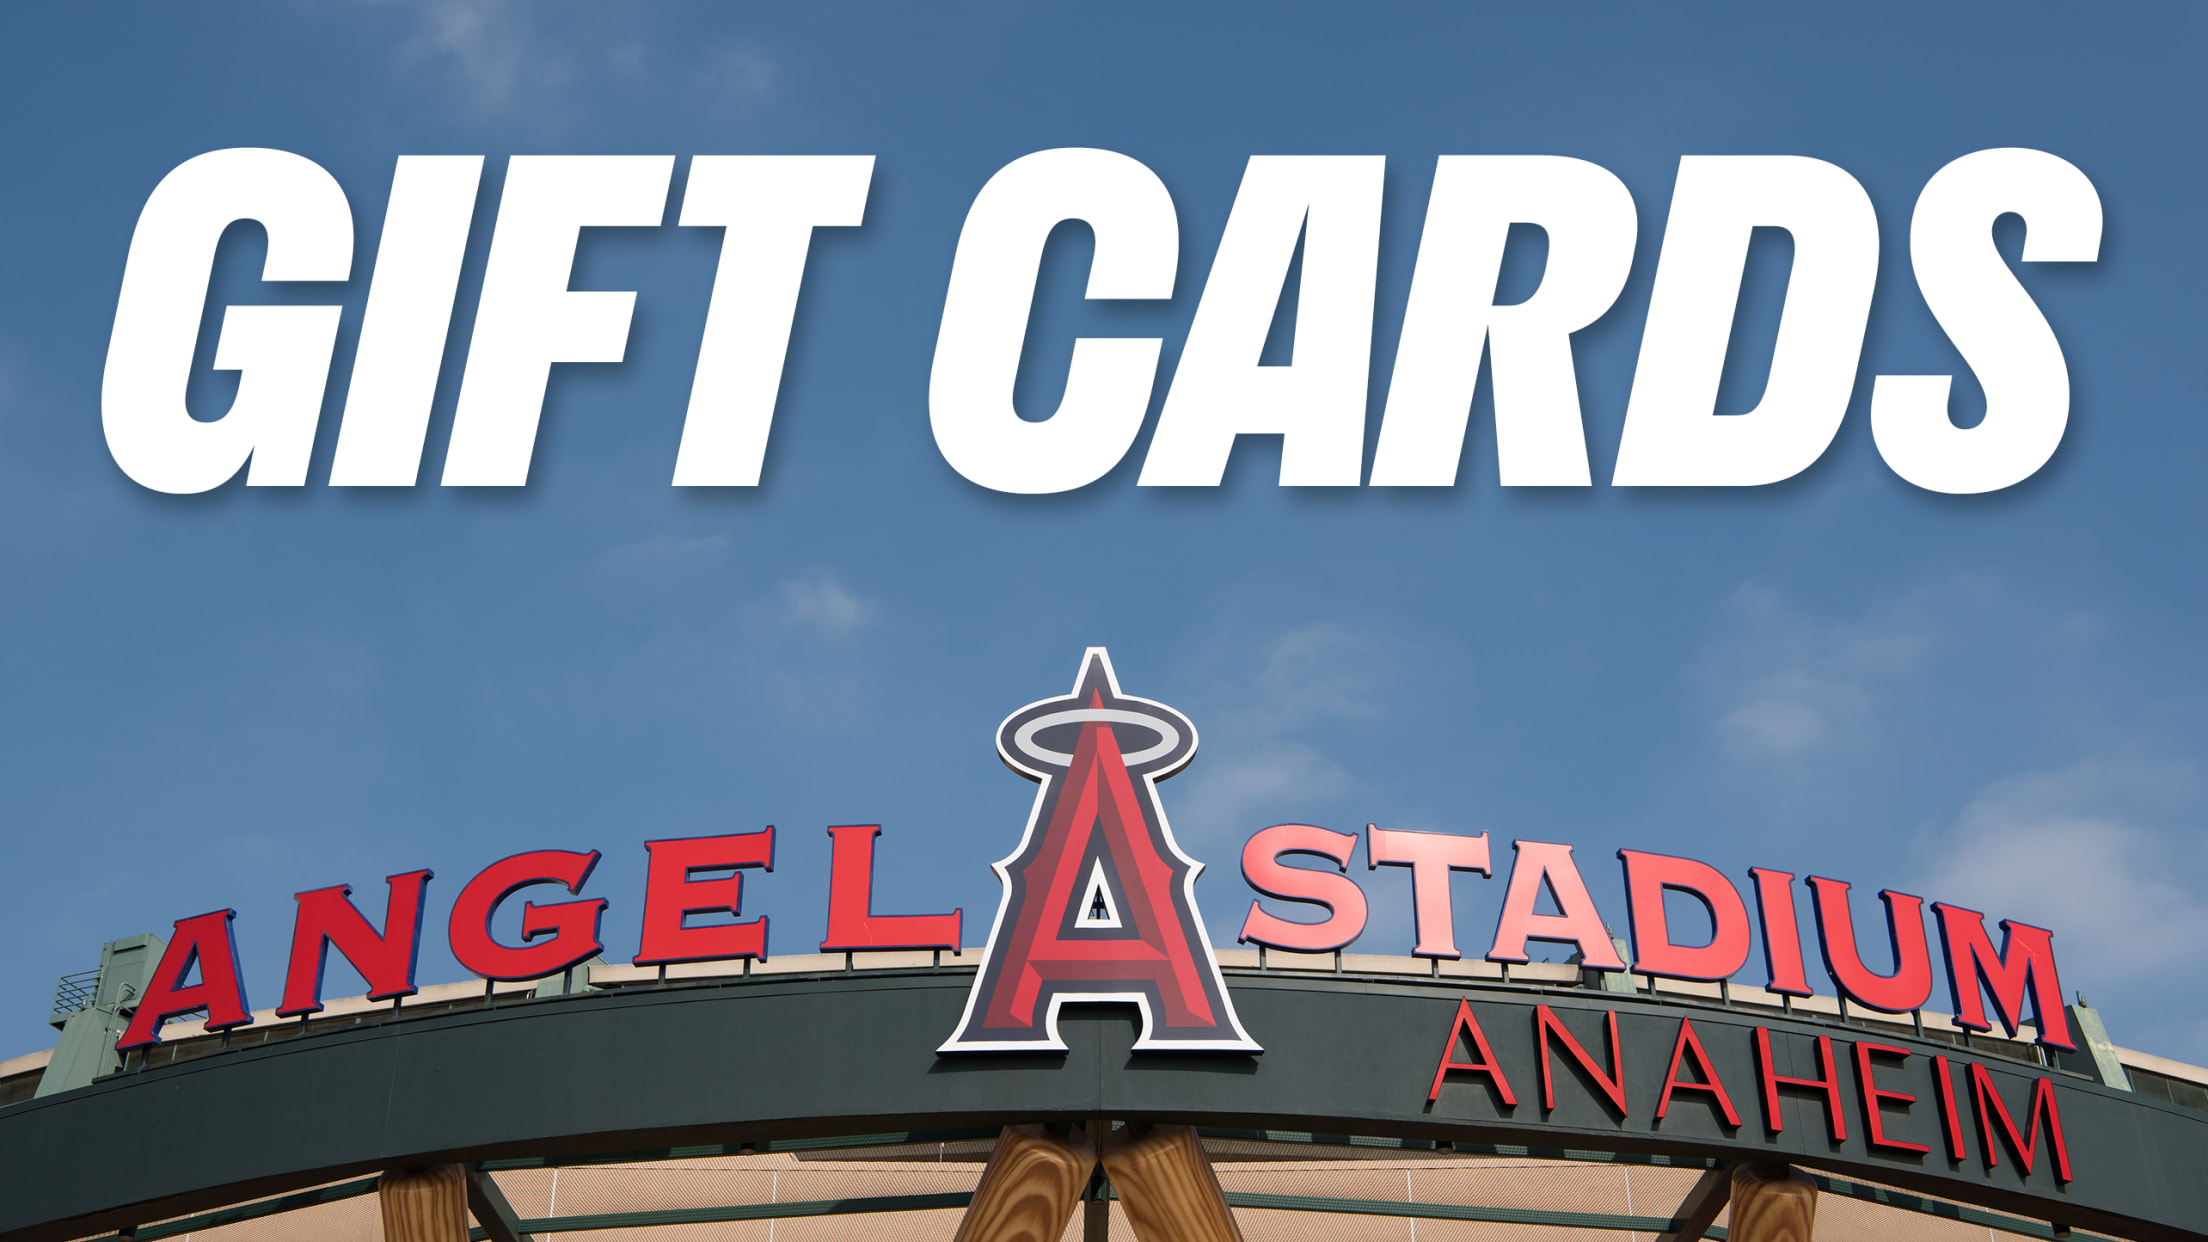 Angel Stadium Team Store in Anaheim, California, US   エンゼルスタジアムストア・米国カリフォルニア州アナハイム② 